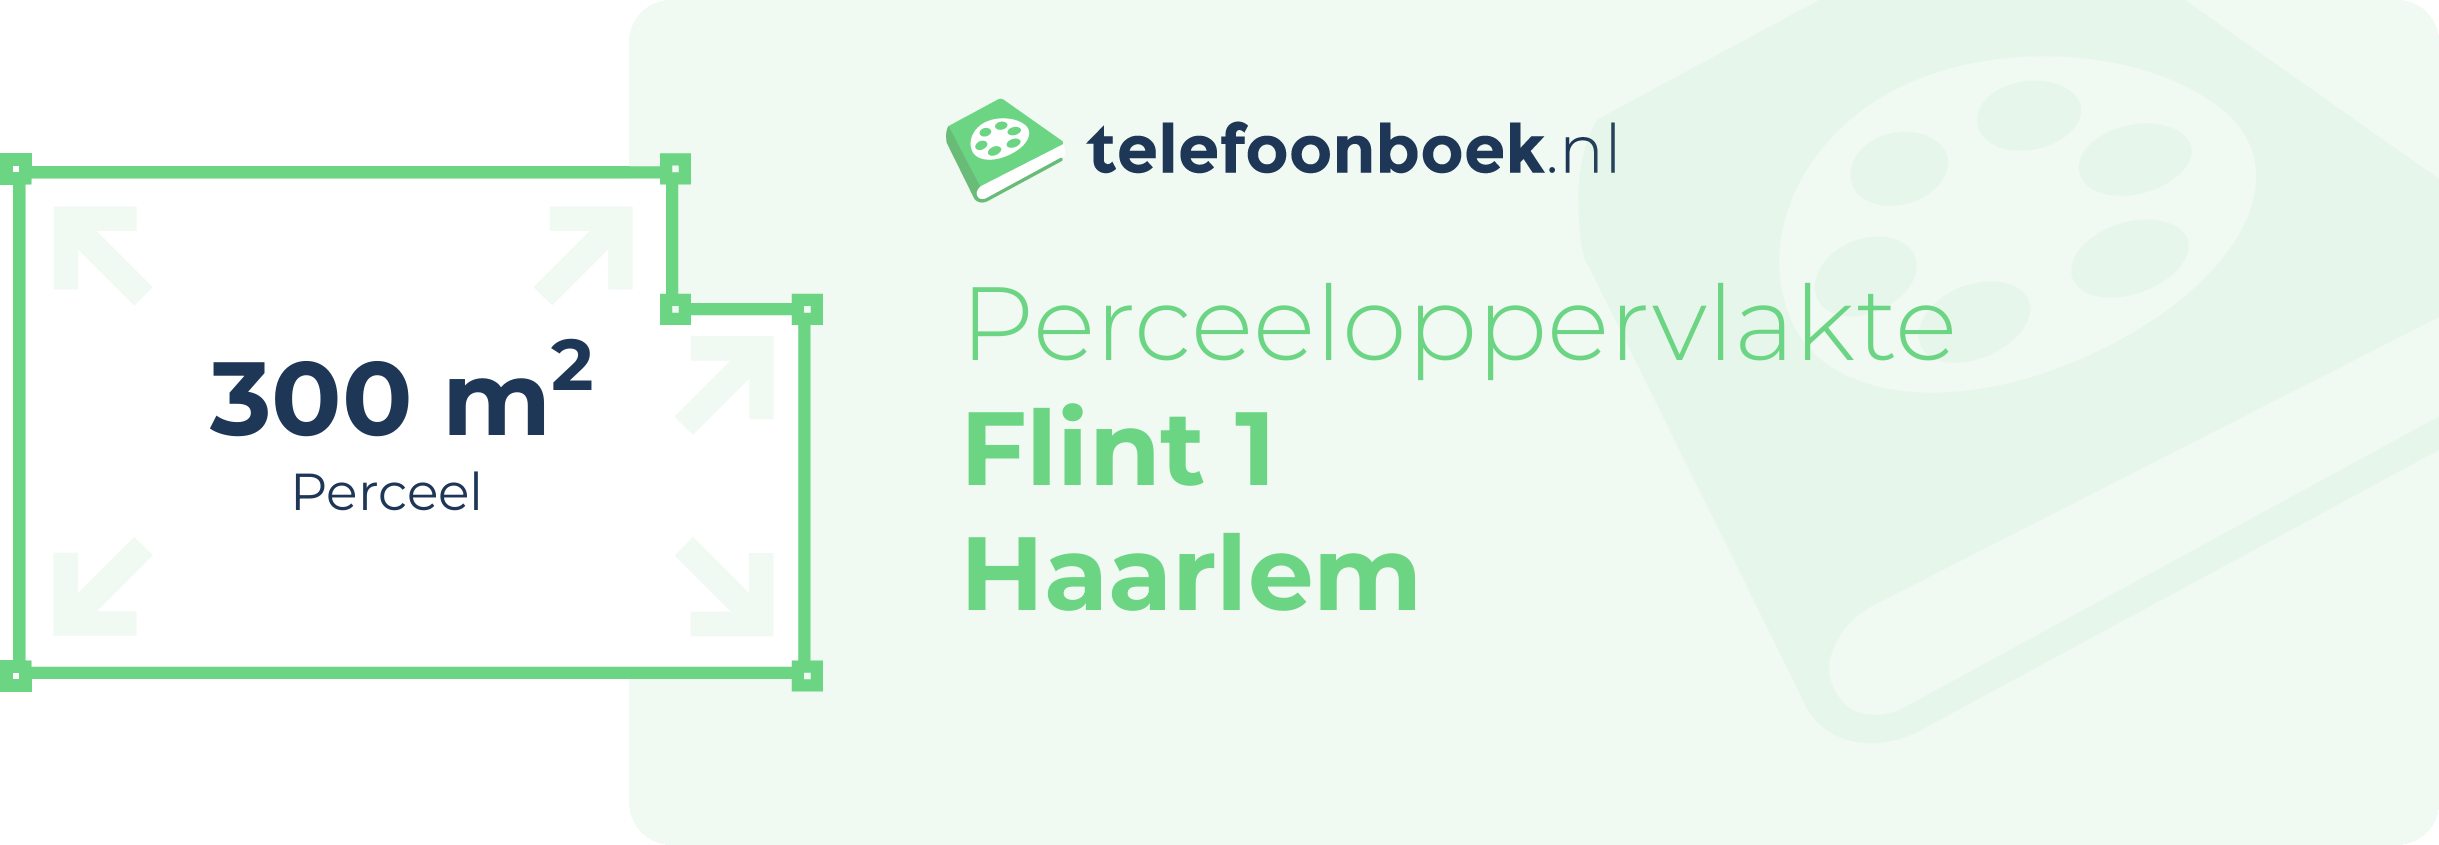 Perceeloppervlakte Flint 1 Haarlem